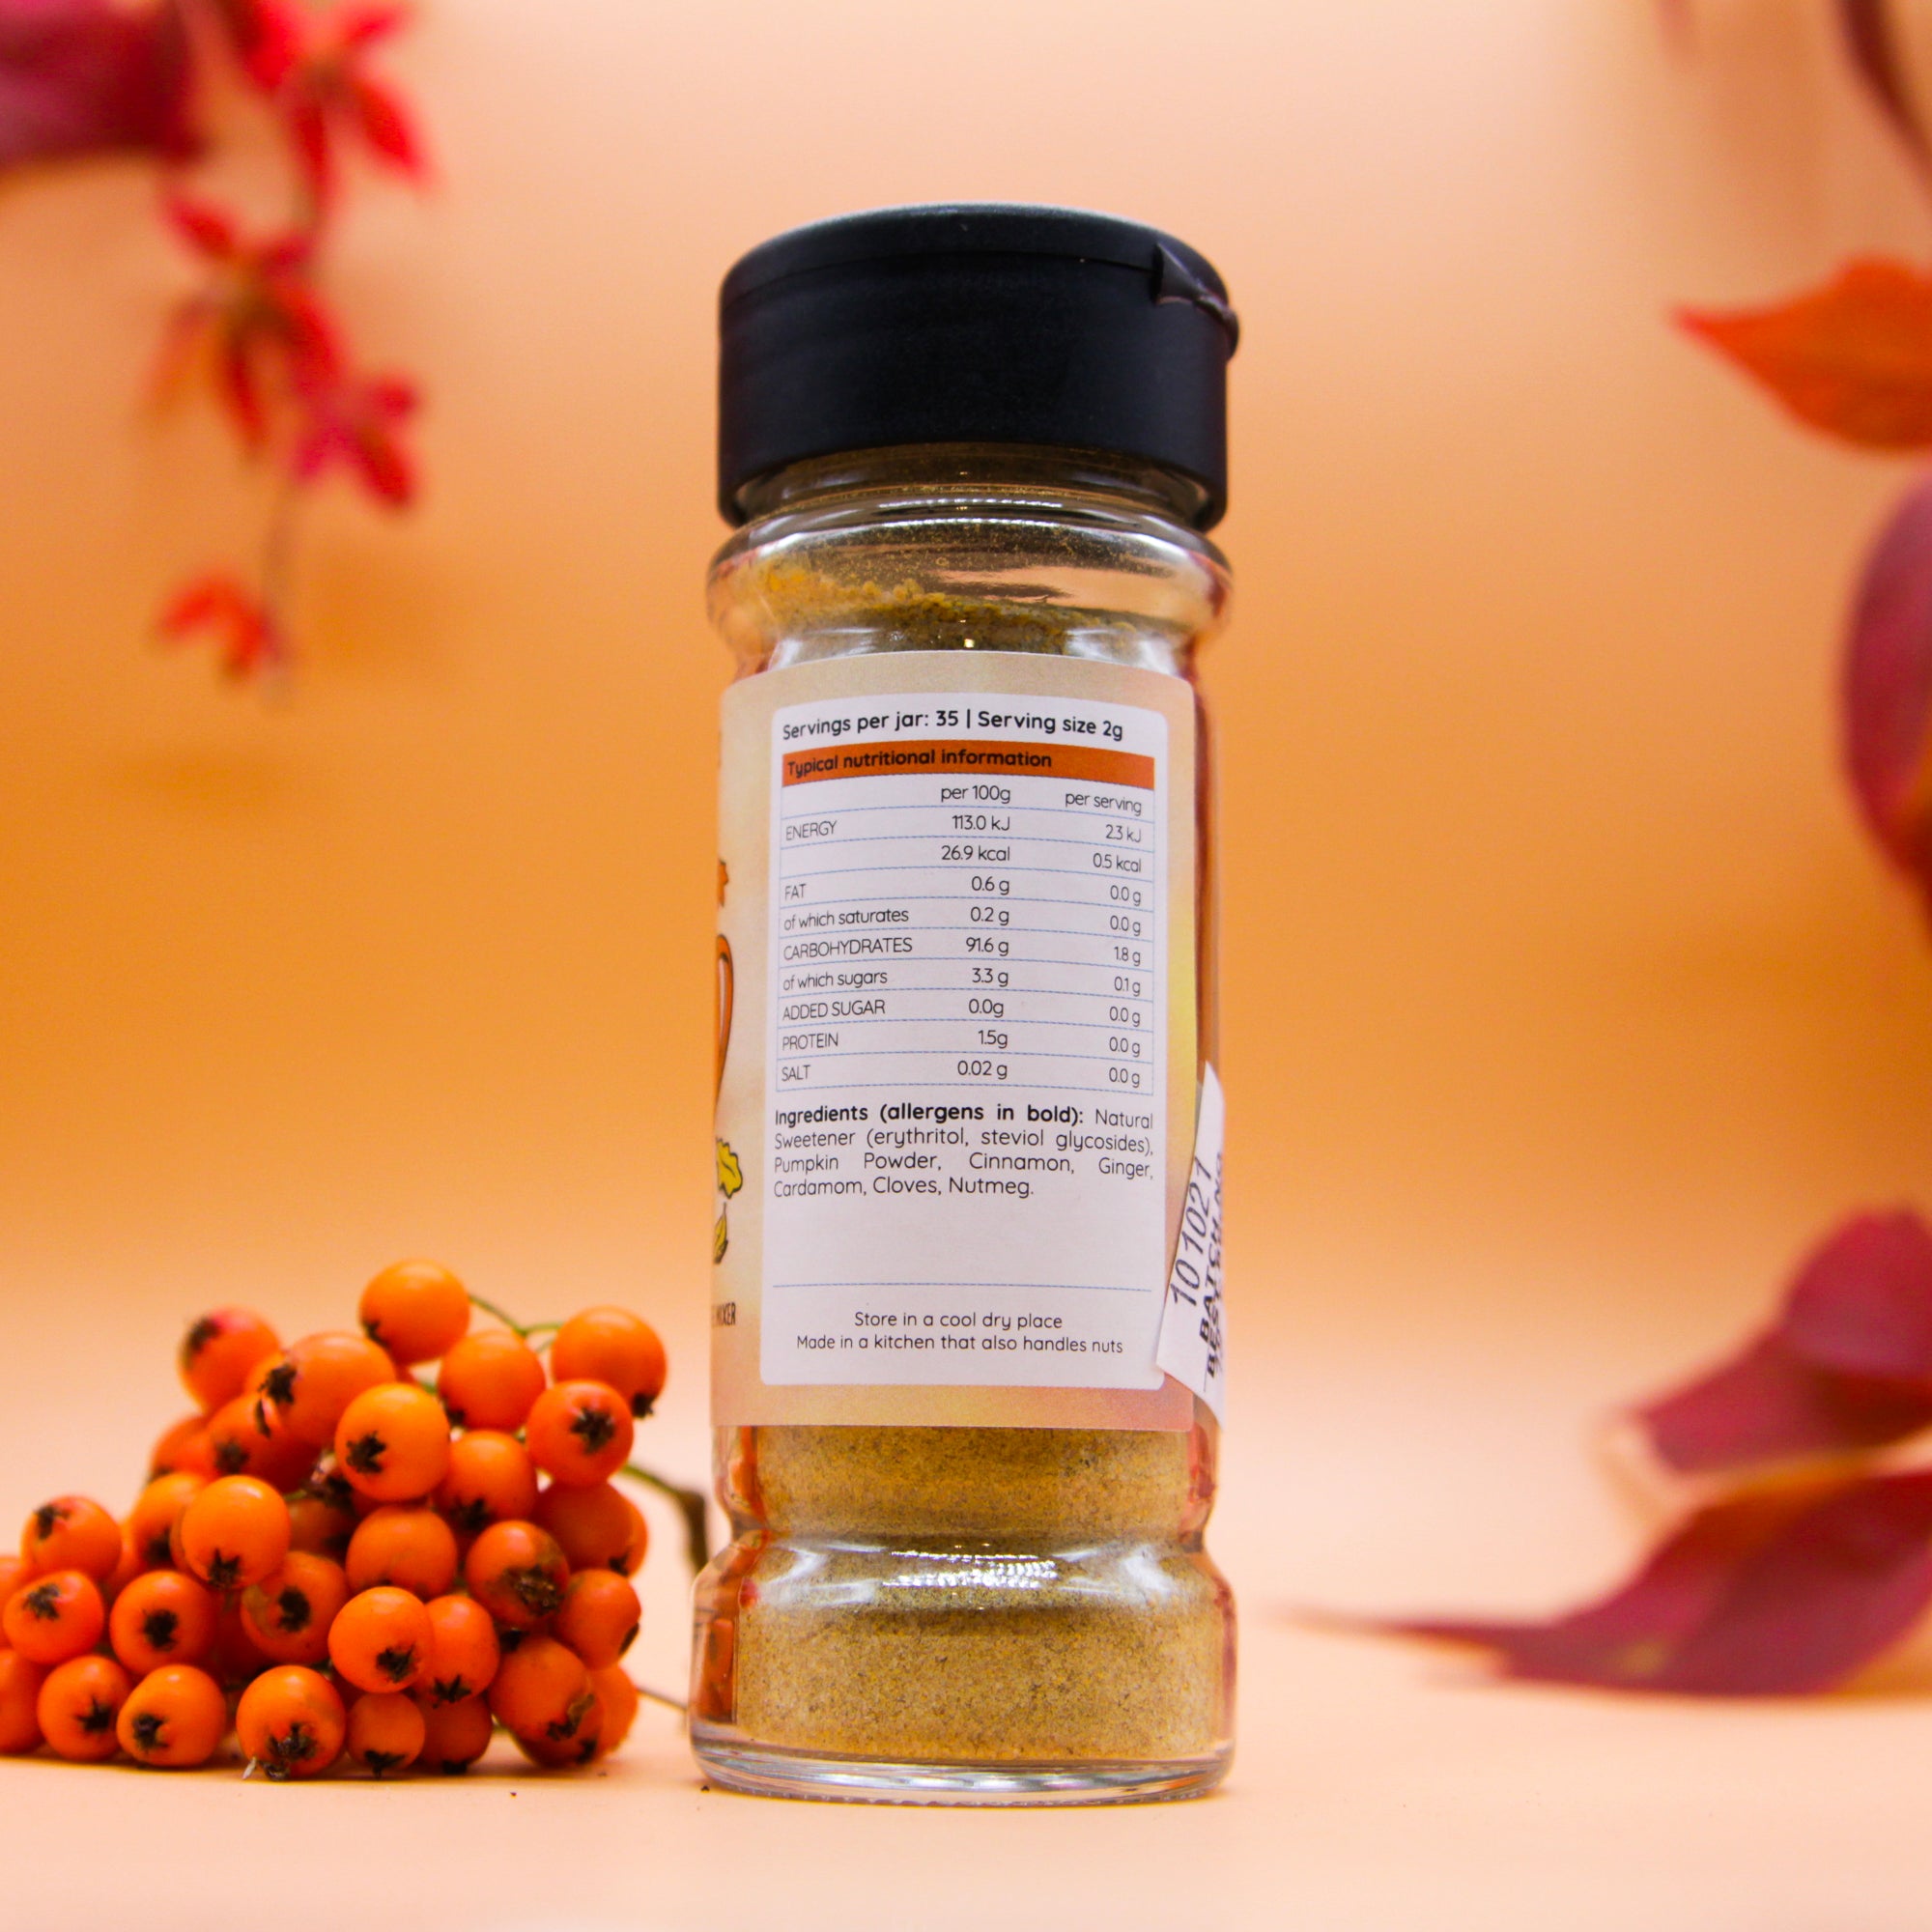 Condimaniac's Low-Sugar Pumpkin Spice Coffee Mixer - (70g) - Seasonal product